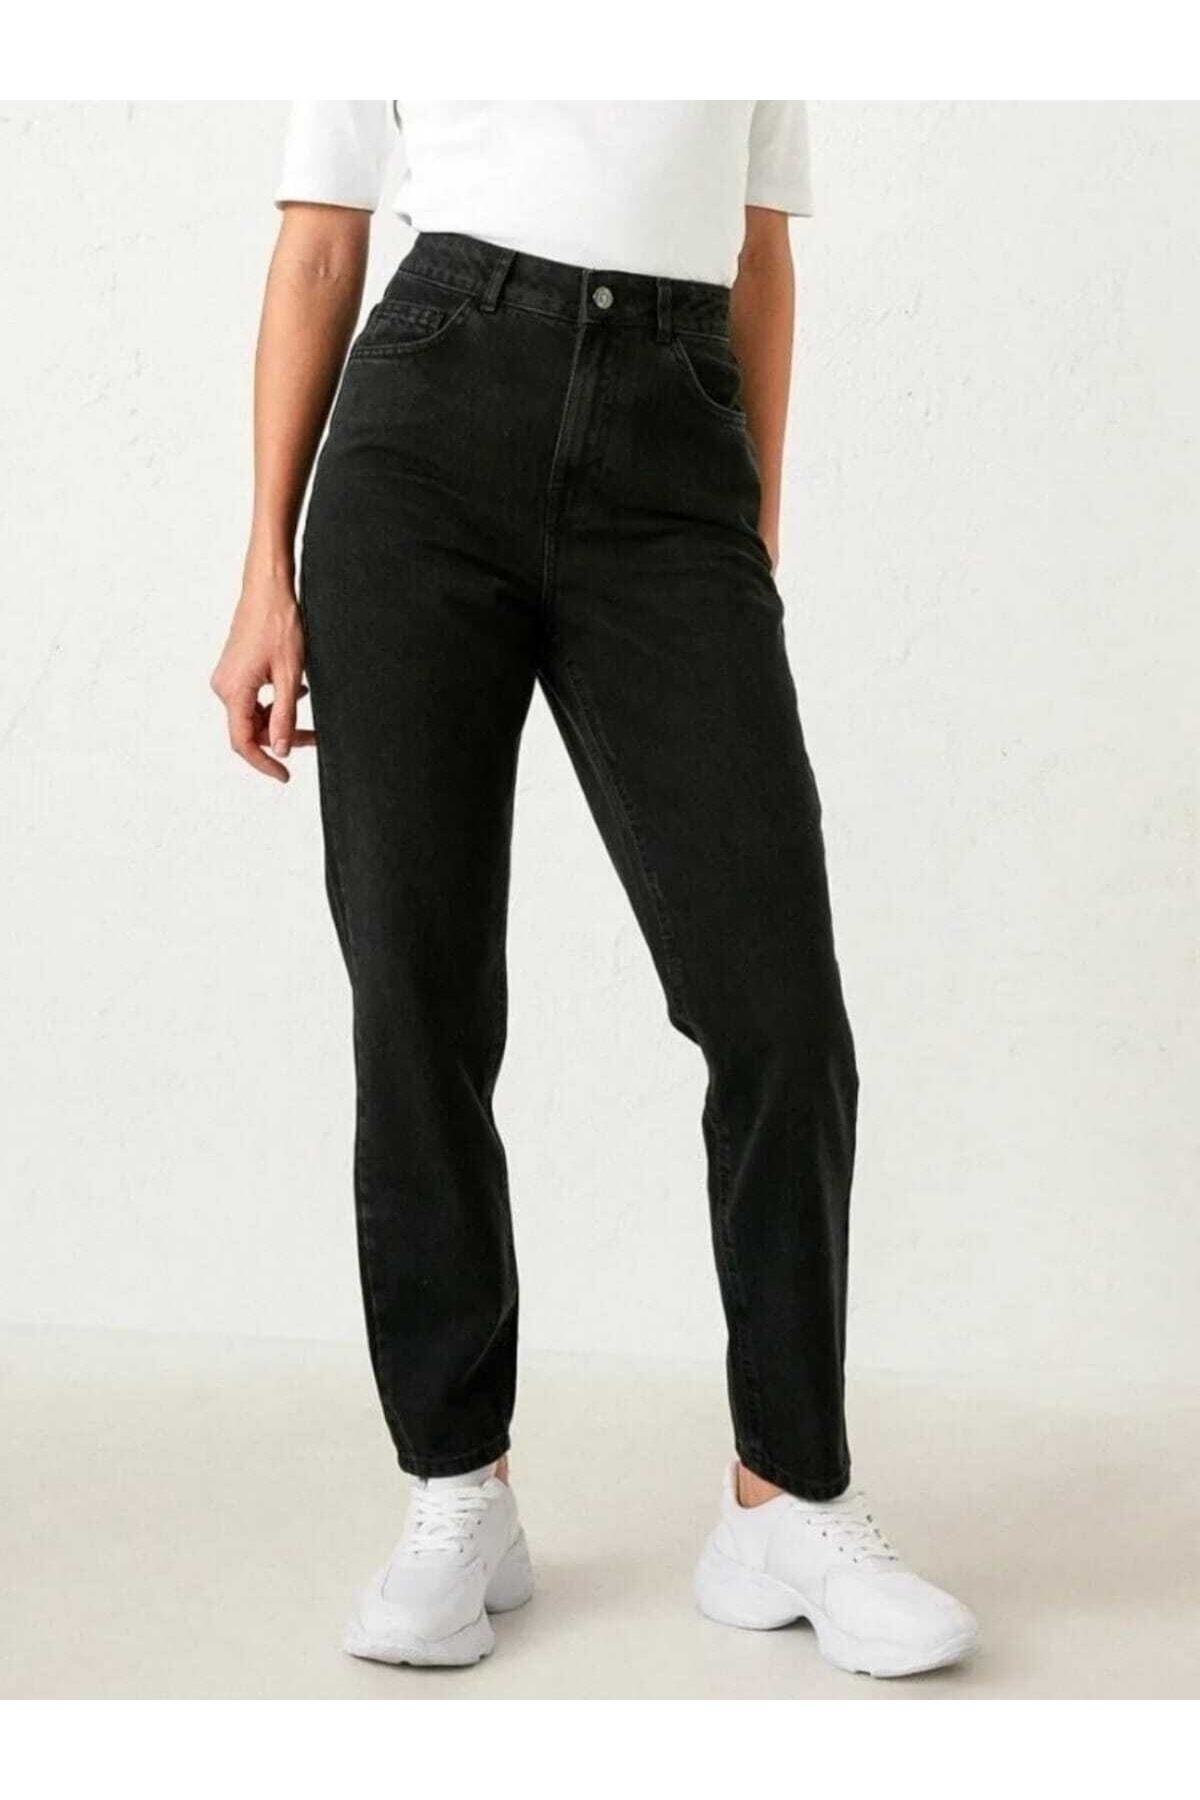 comfort jeans Tref Jeans&Ngbutika Süper Yüksek Bel Comfort Likralı Mom Jean Kot Pantolon